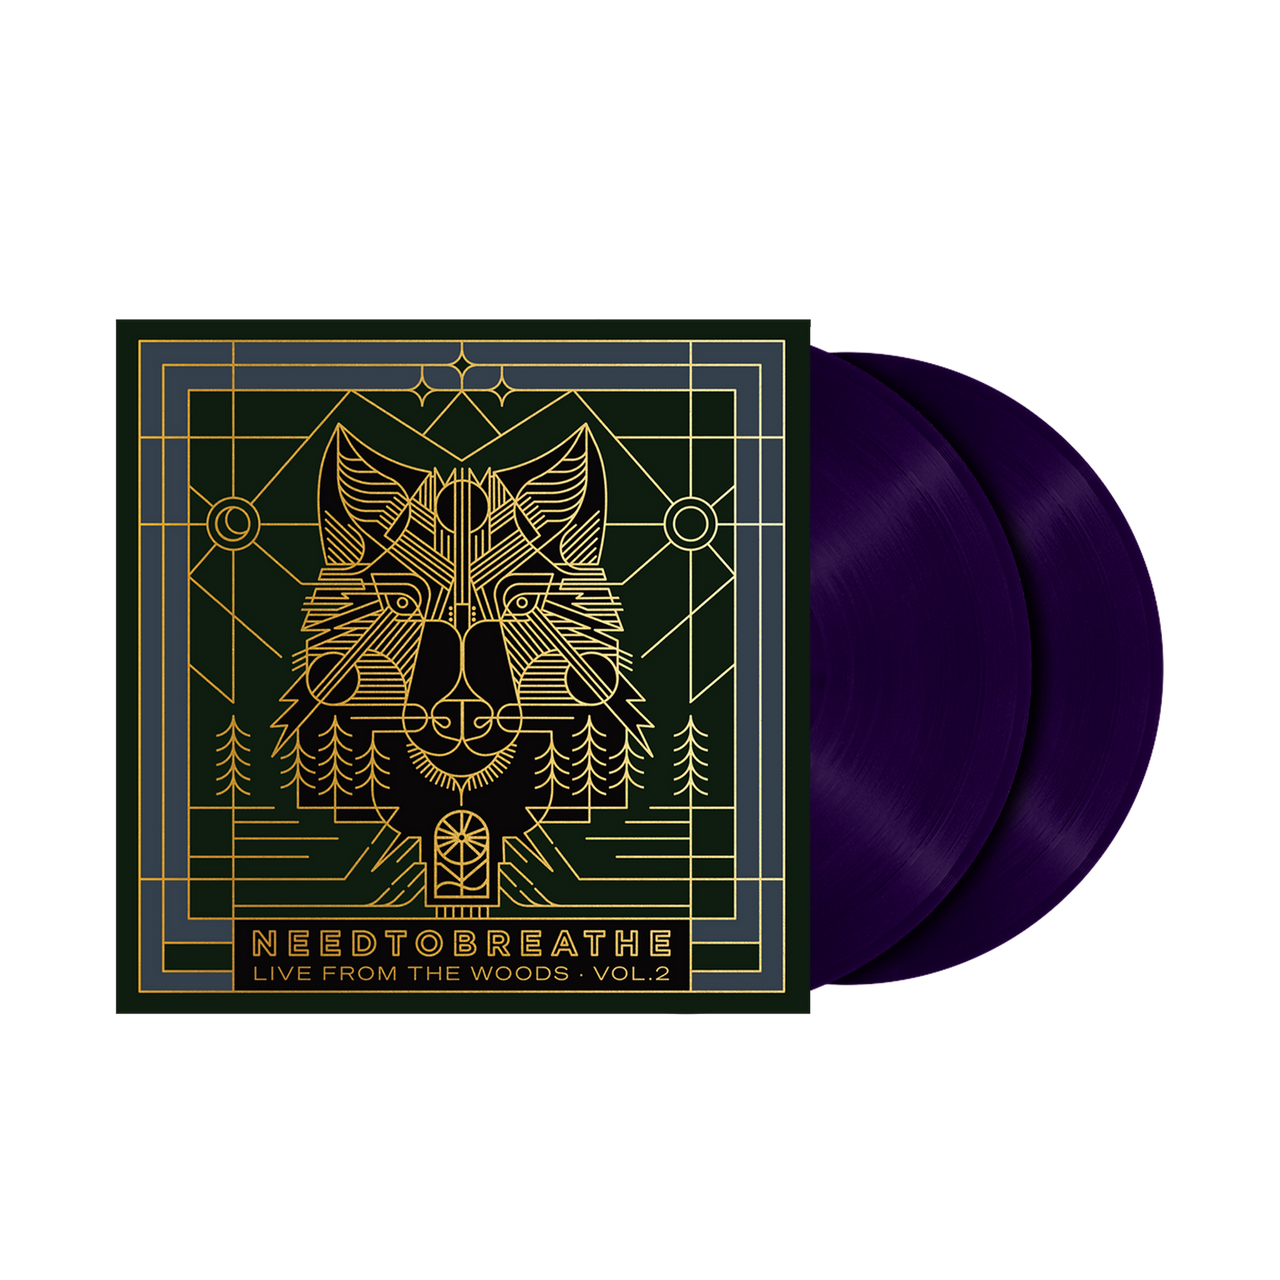 Needtobreathe: Live From The Woods, Vol. 2 Vinyl LP (Purple)